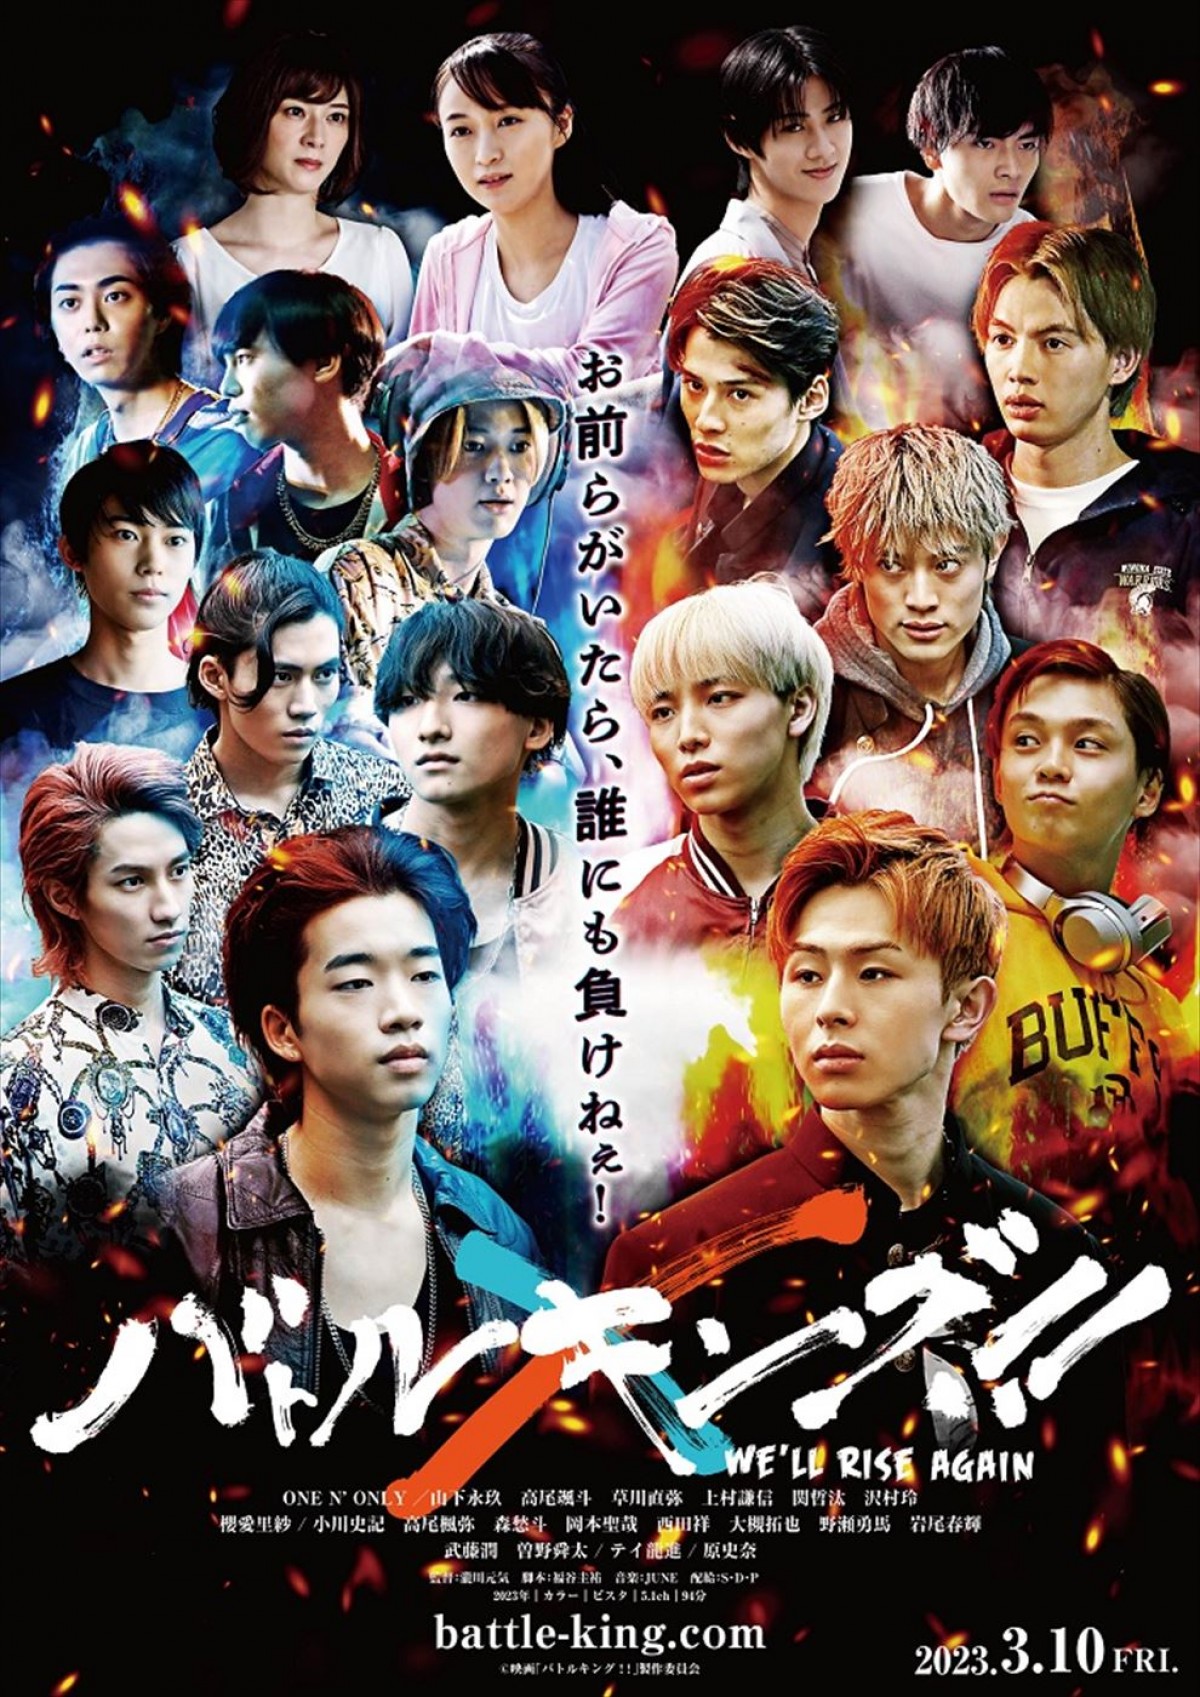 ONE N’ONLY主演『バトルキング！！』、来年3月公開へ　追加キャストにM！LK・曽野舜太、ゲンジブ・武藤潤ら